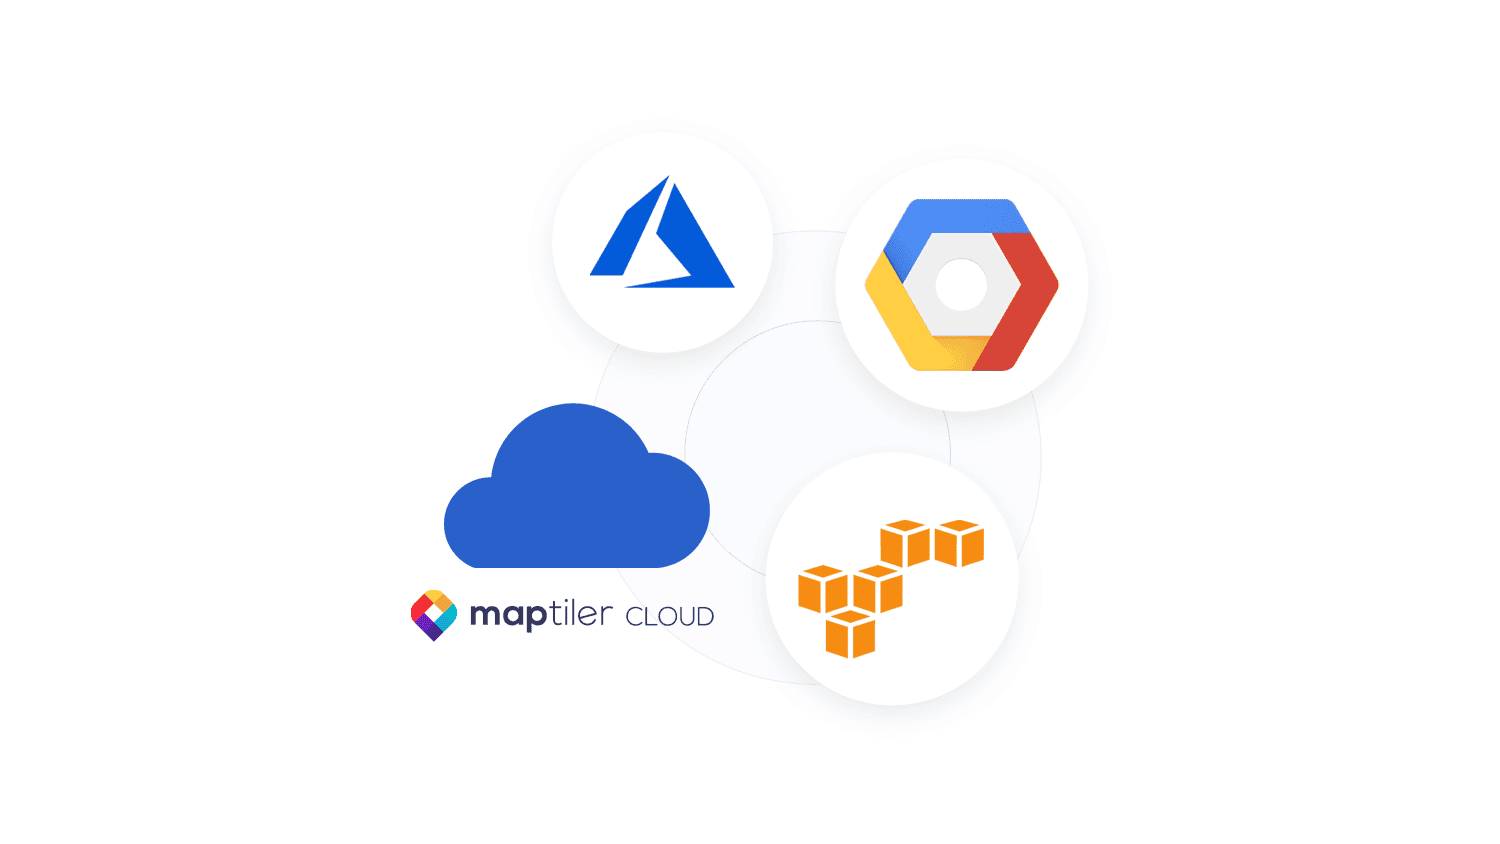 Map tiles upload service for Amazon S3, Microsoft Azure, Google Cloud, and MapTiler Cloud